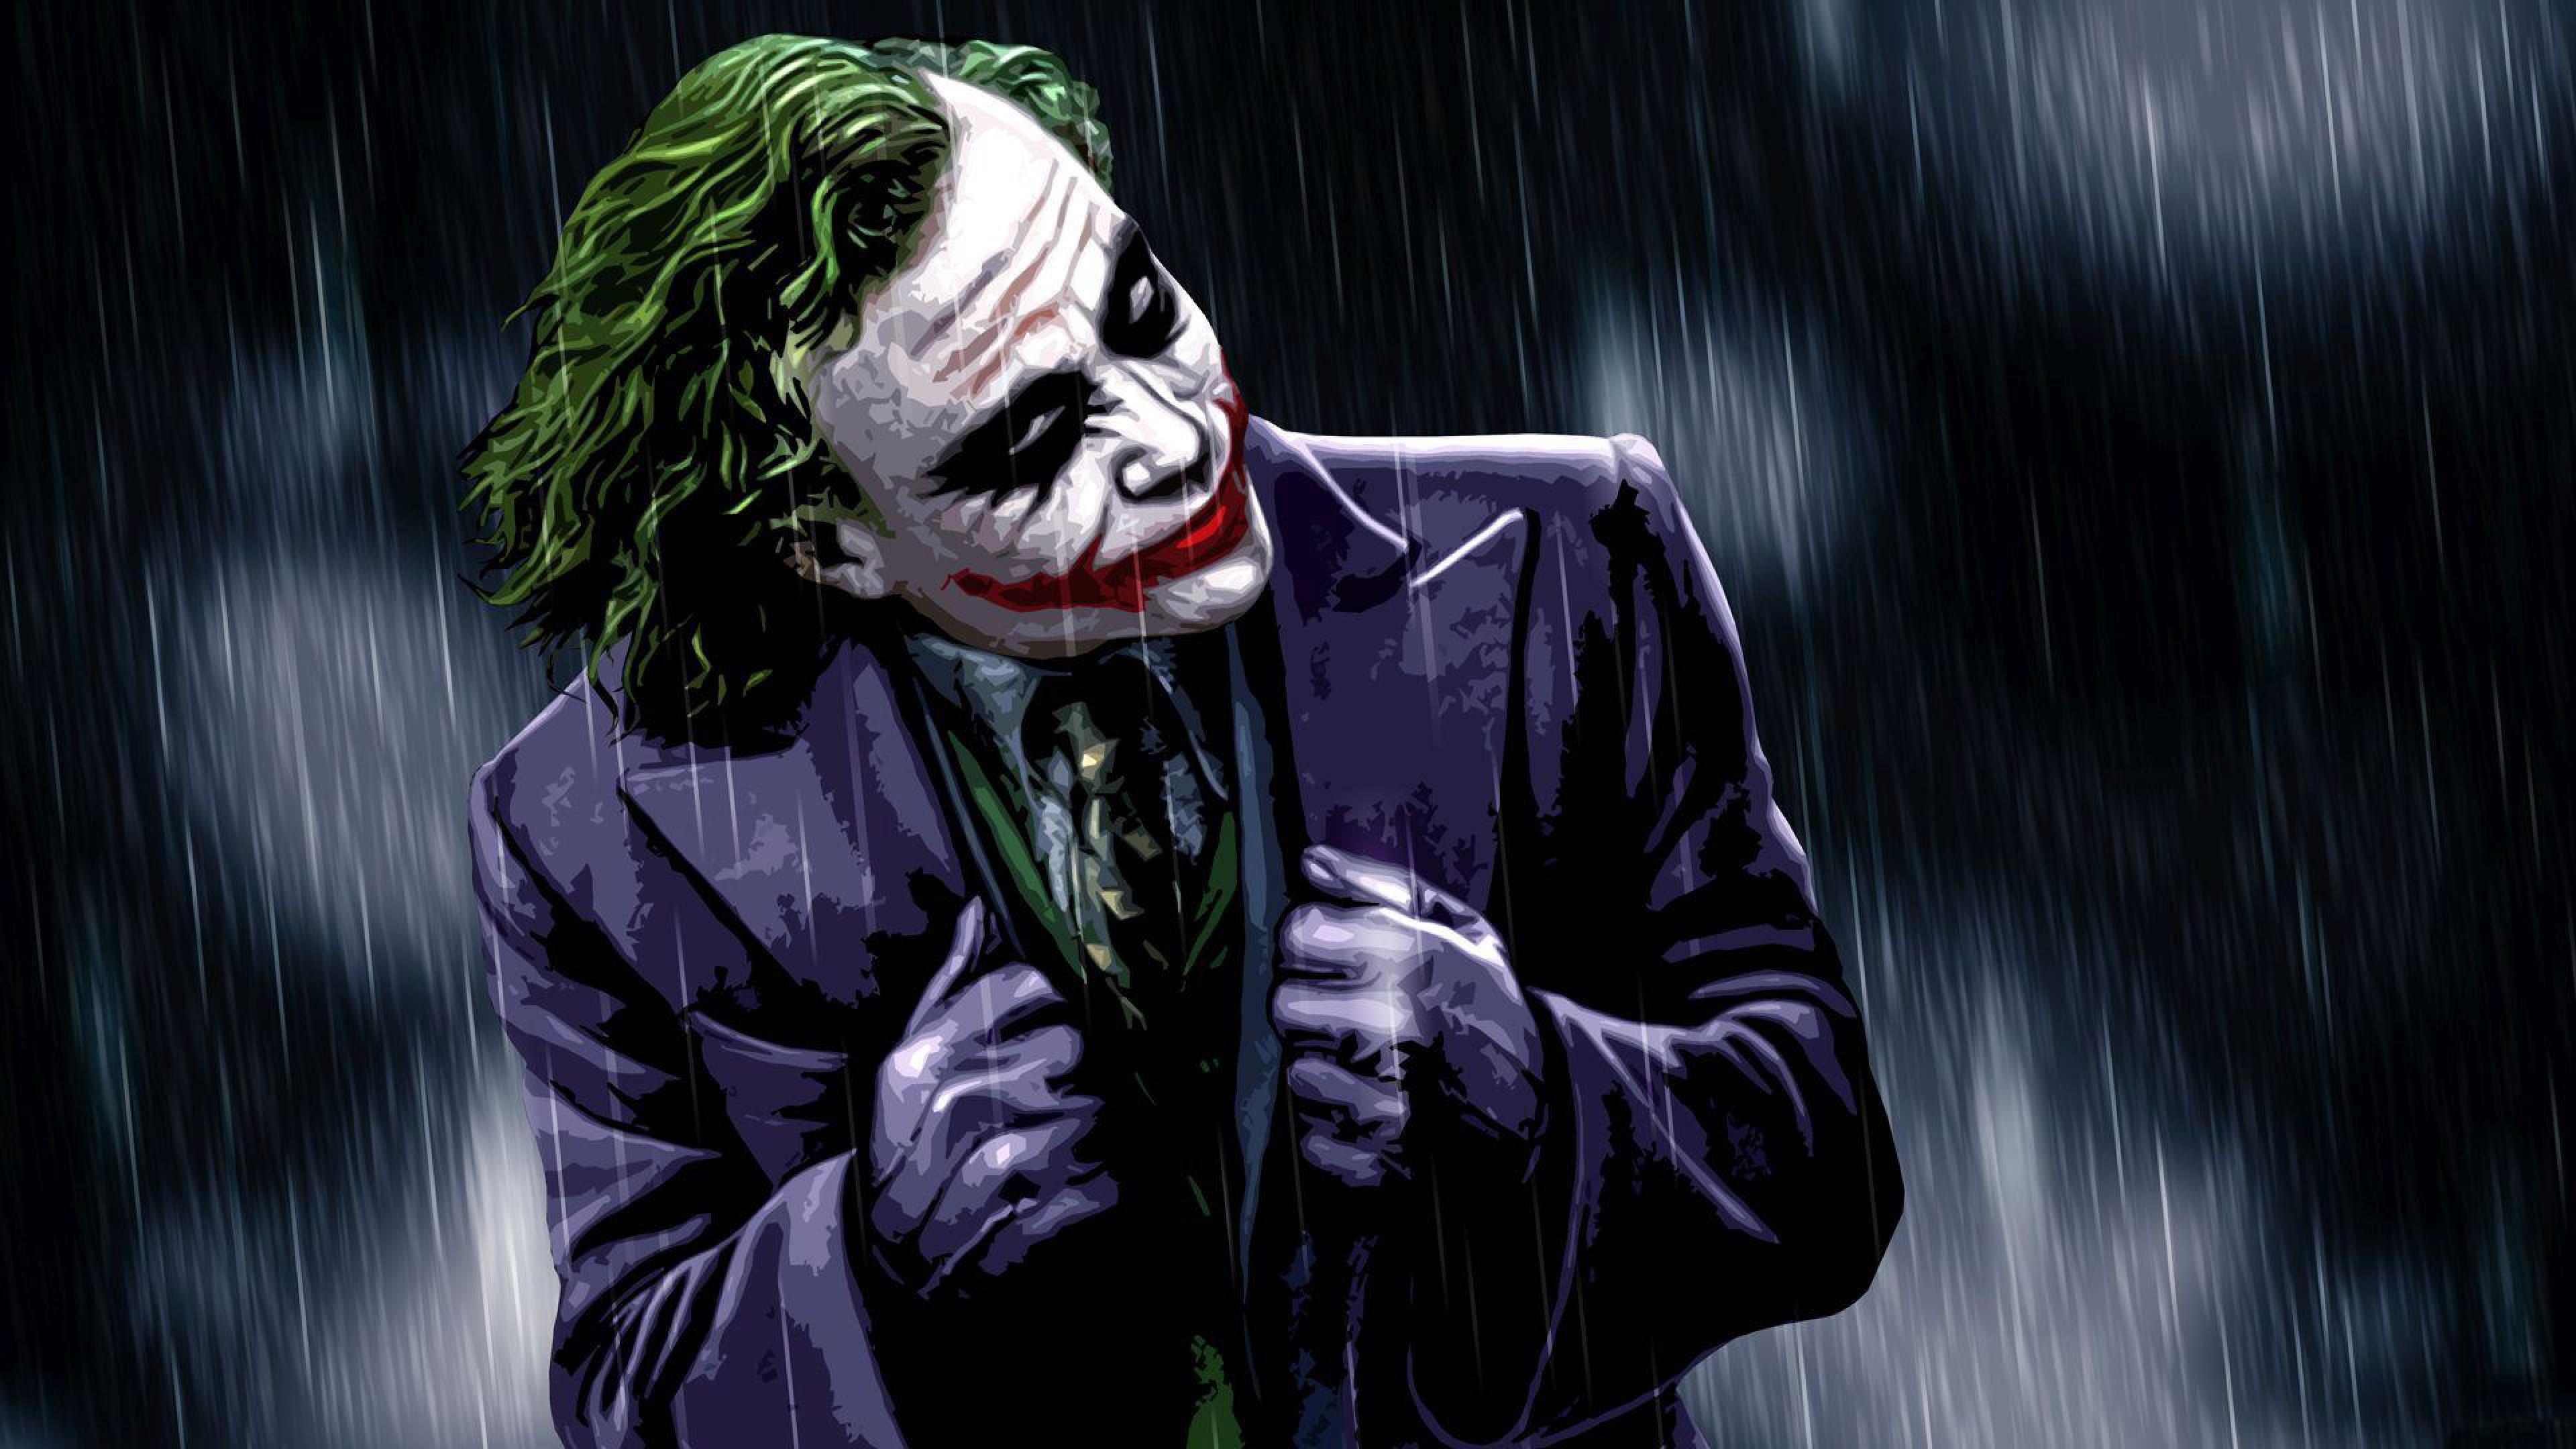 The Joker The Dark Knight Desktop Wallpaper Hd For Mobile Phones And  Laptops 3840x2160 : 